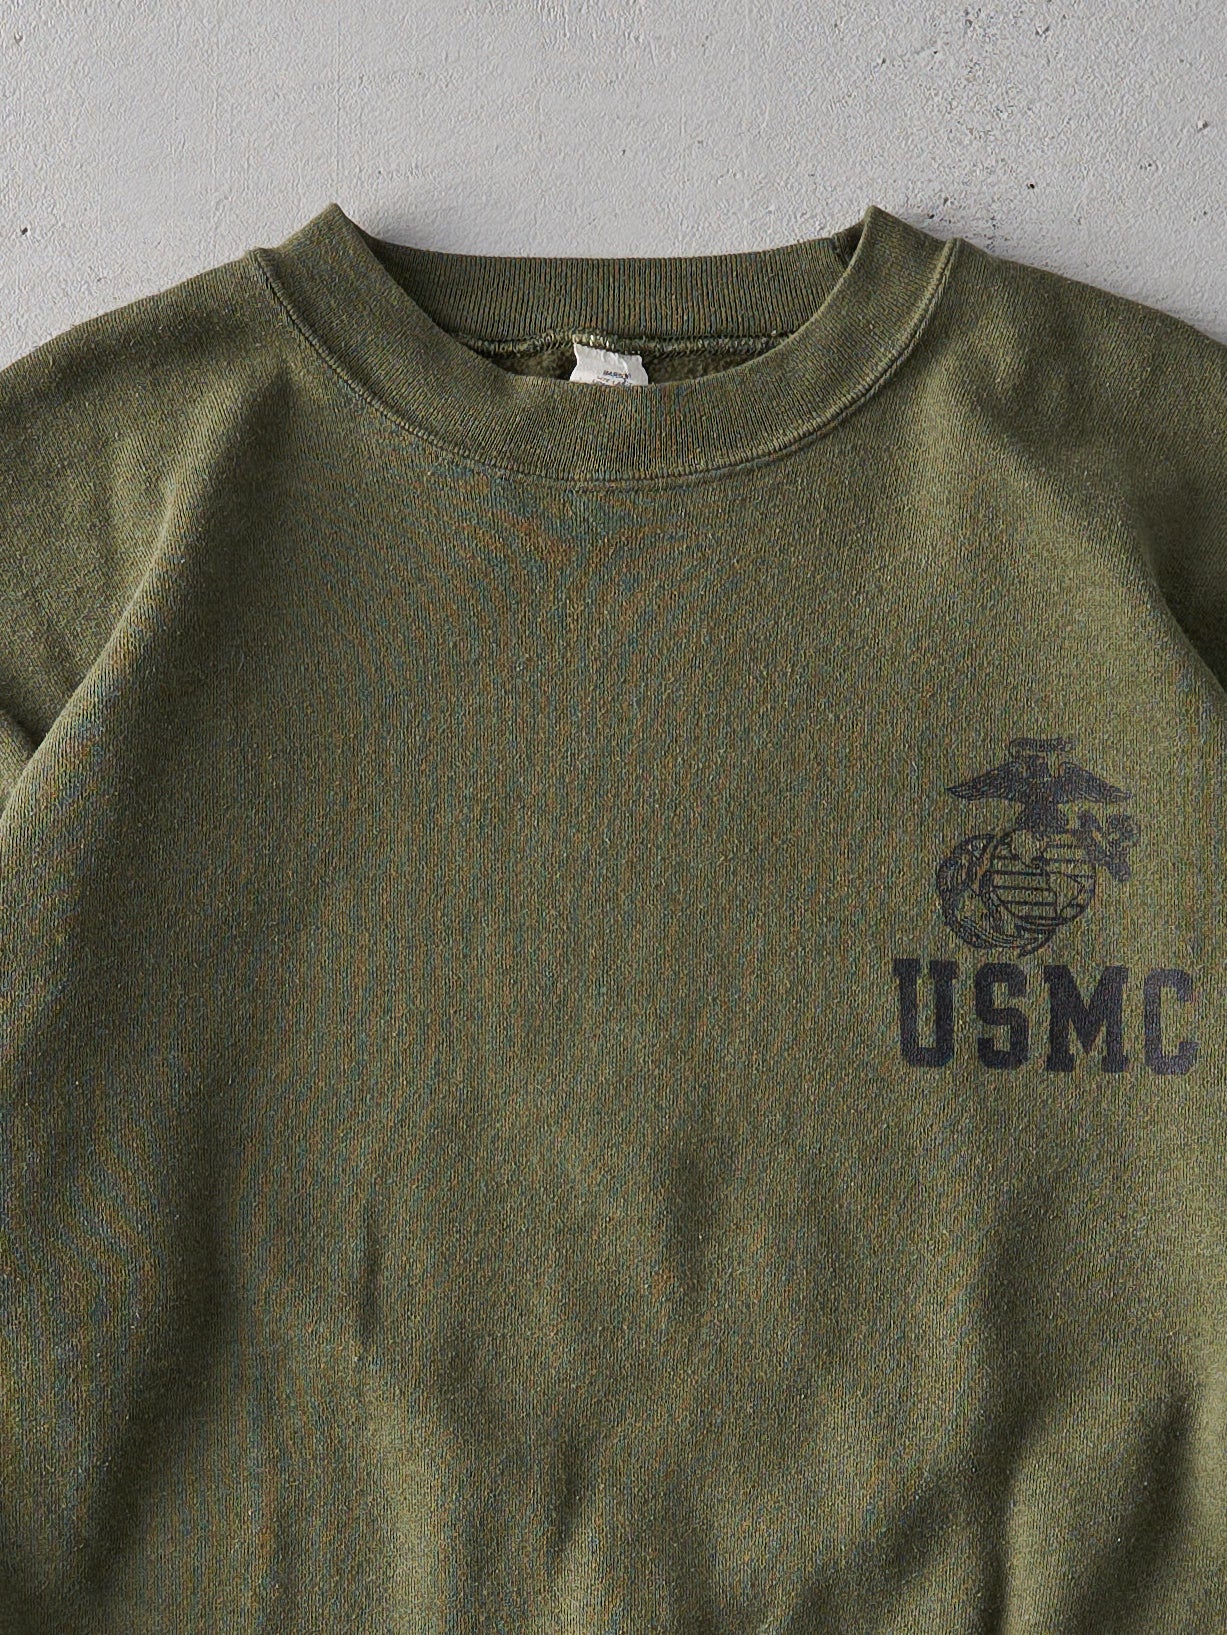 Vintage 80s Army Green USMC Marine Crewneck (M/L)